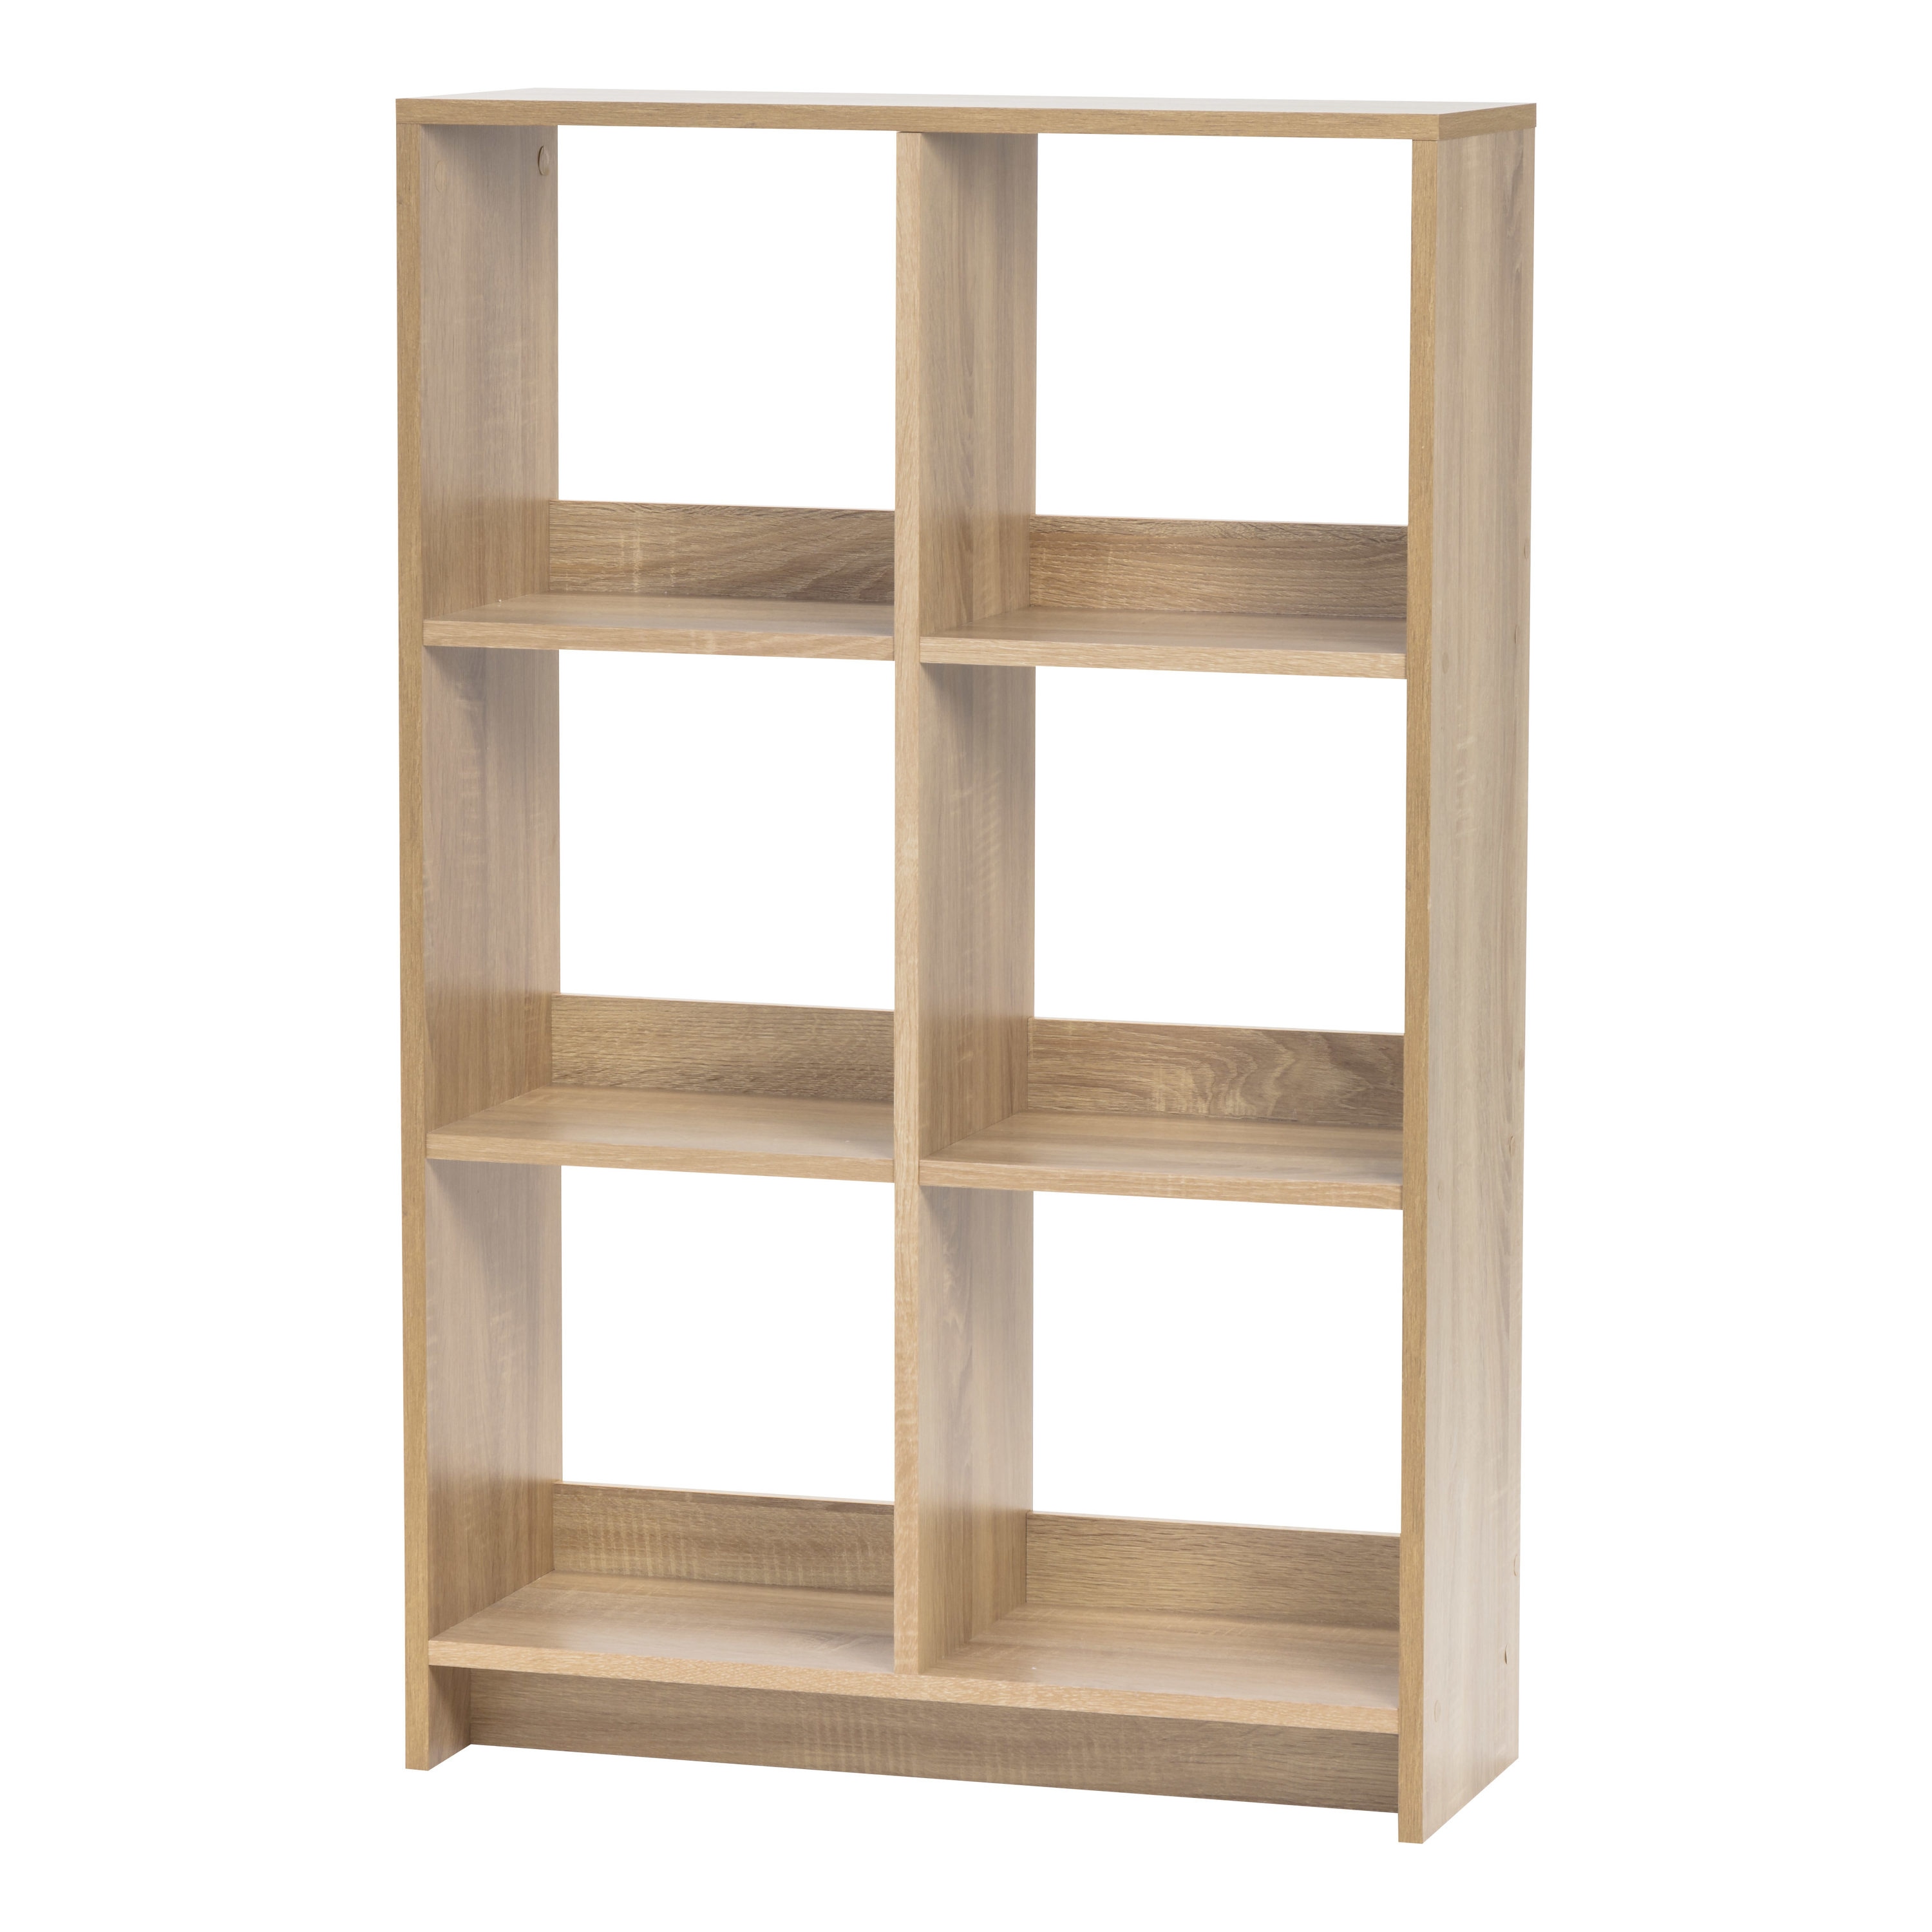  IRIS USA 2-Tier Wood Storage Shelf, Yellow/White : Home &  Kitchen